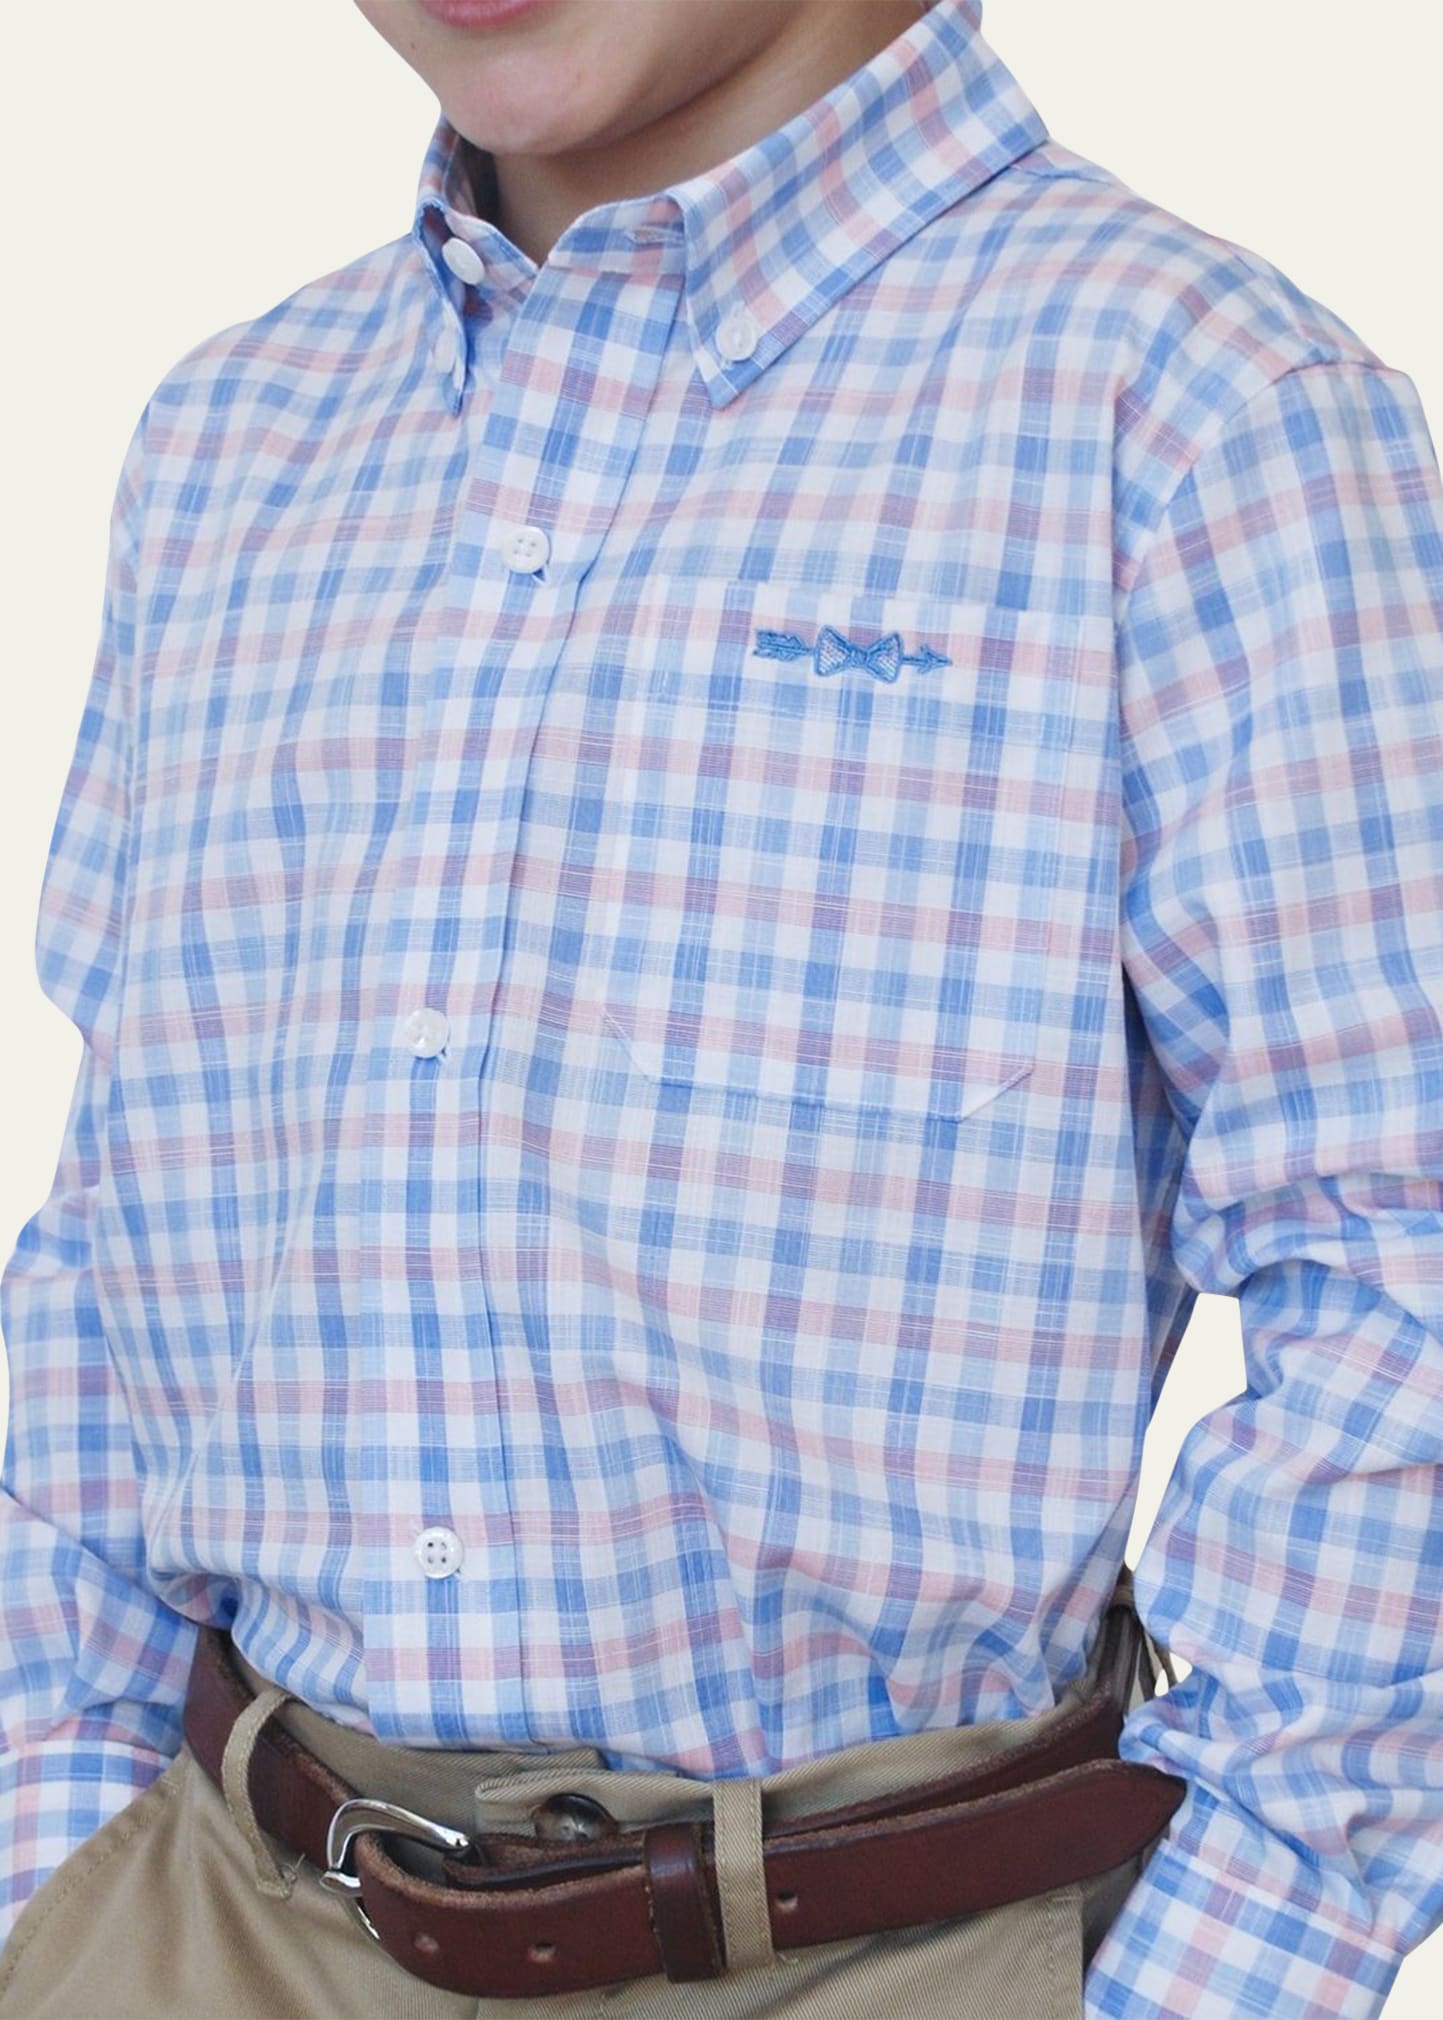 Bowen Arrow Button-Down Shirt - Monogram Option, Size 4/5-18